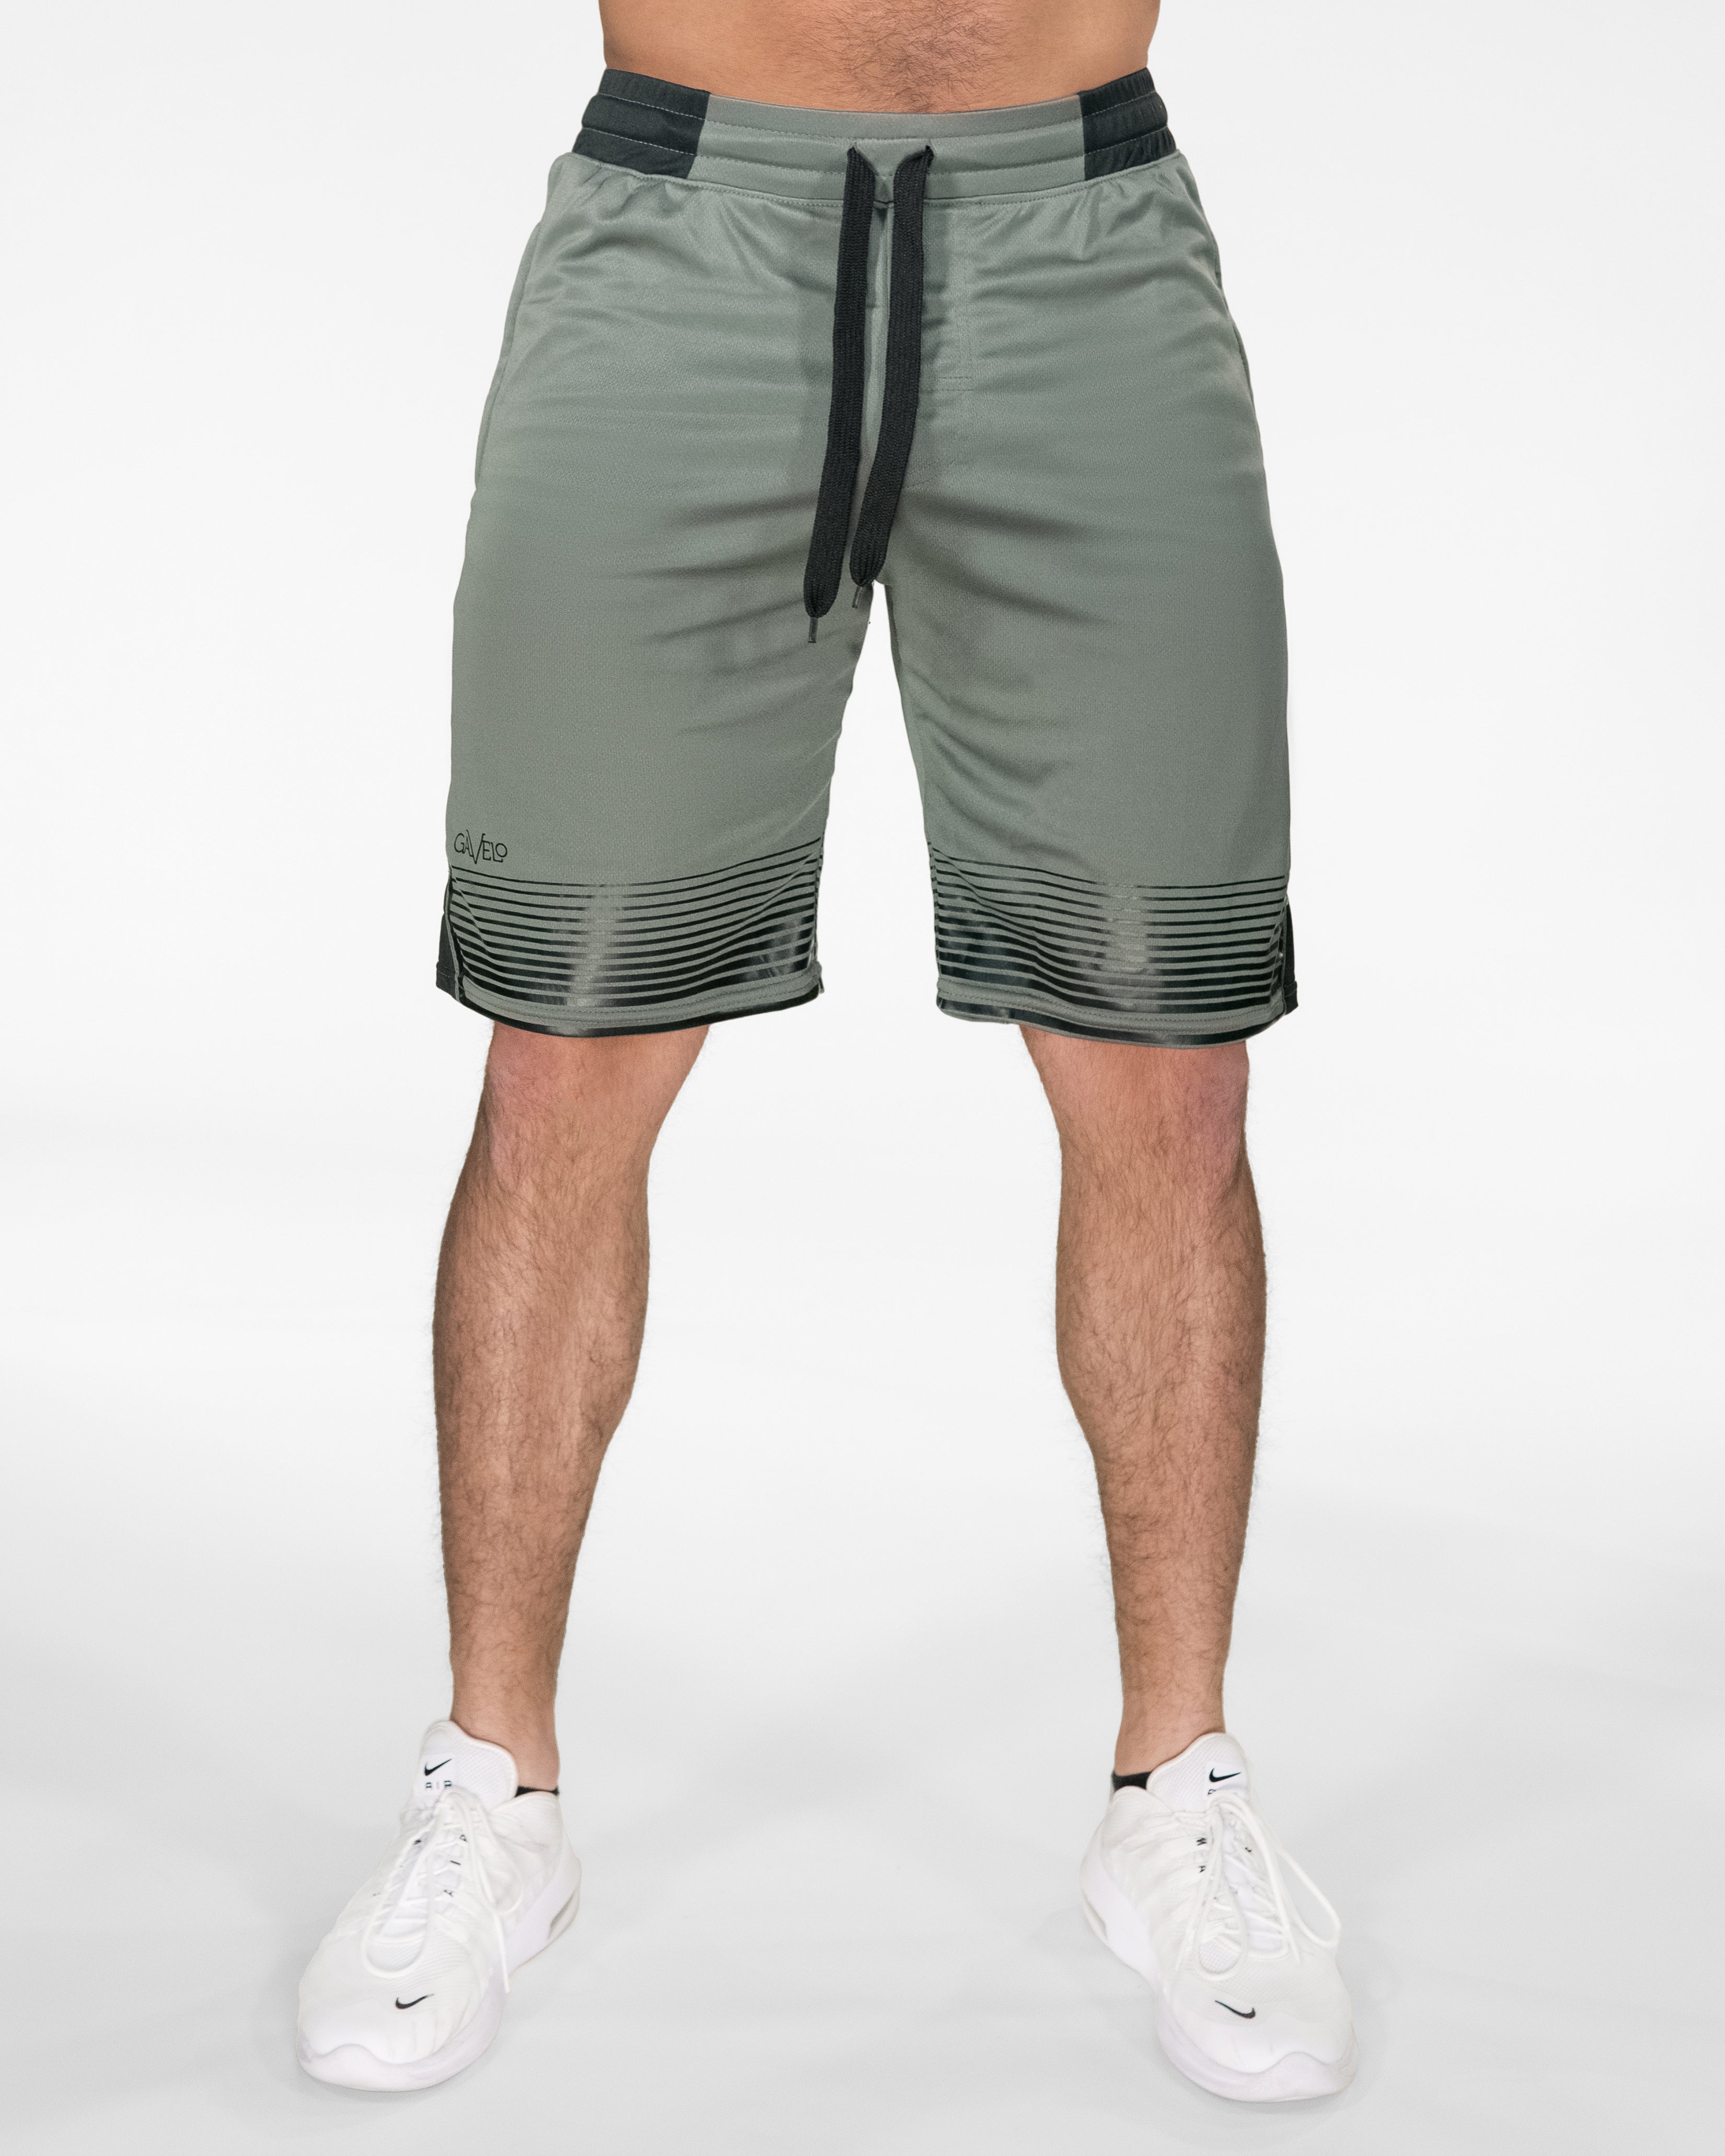 GAVELO Sniper Green Shorts